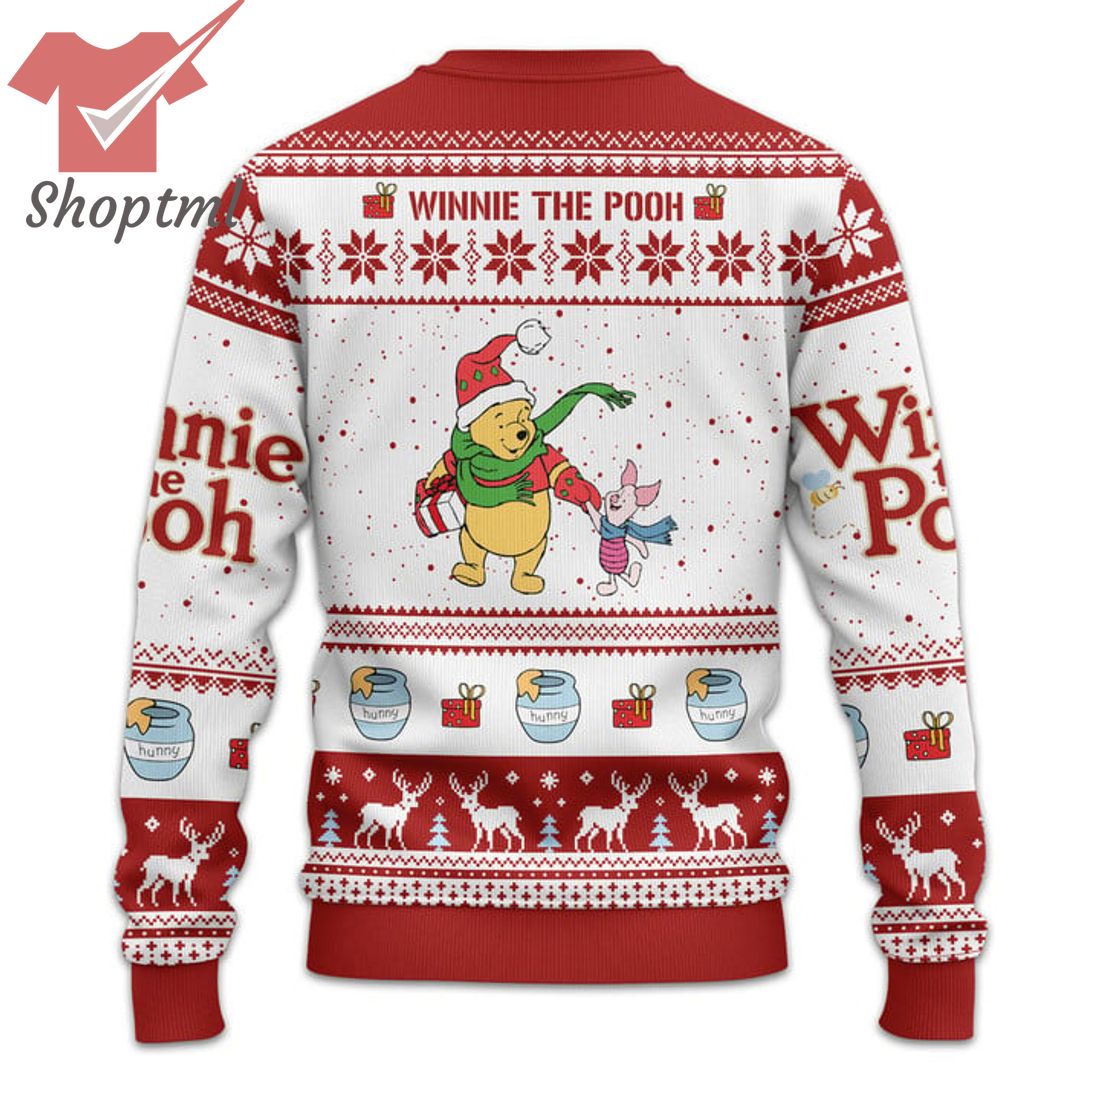 WWinnie the Pooh and Christmas Too Ugly Christmas Sweater